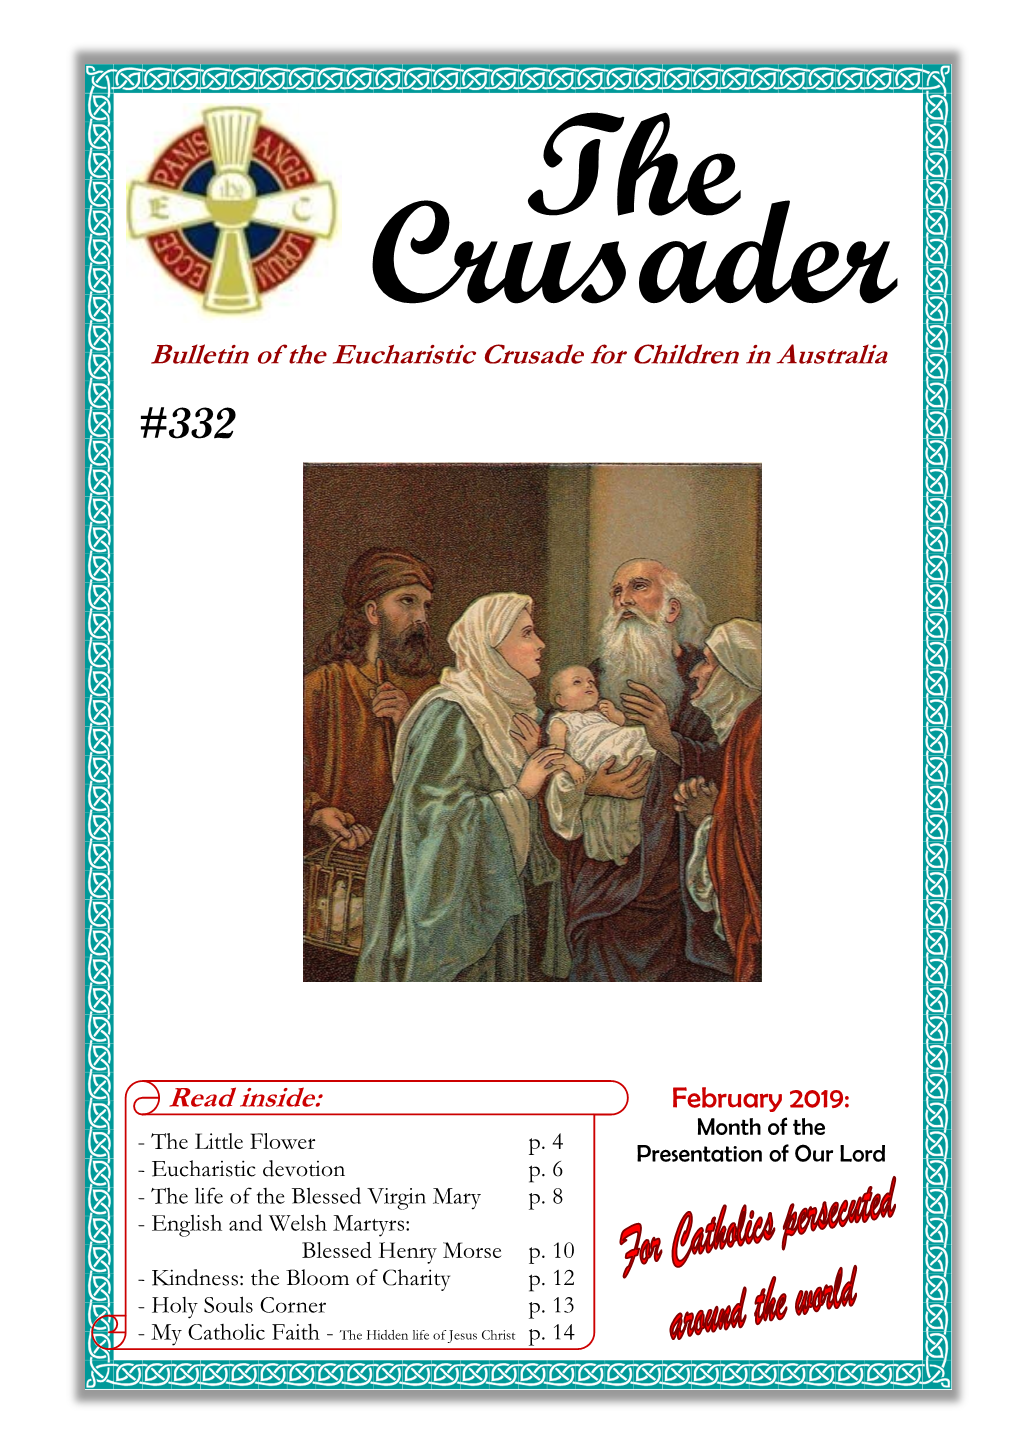 The Crusader Bulletin of the Eucharistic Crusade for Children in Australia #332